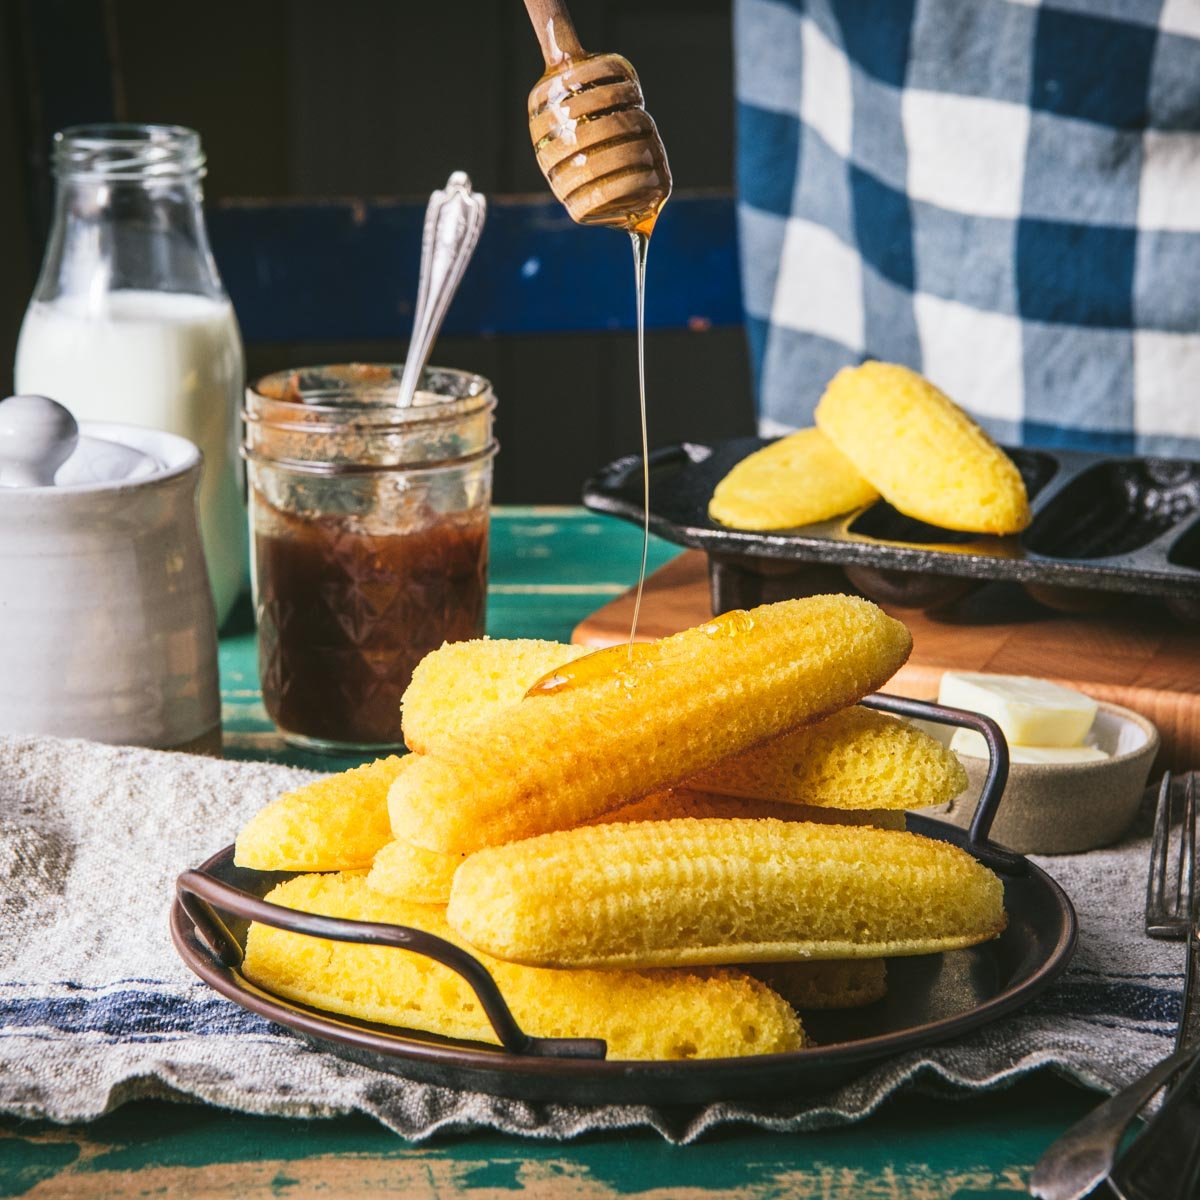 Old-Fashioned Southern Corn Sticks - The Seasoned Mom